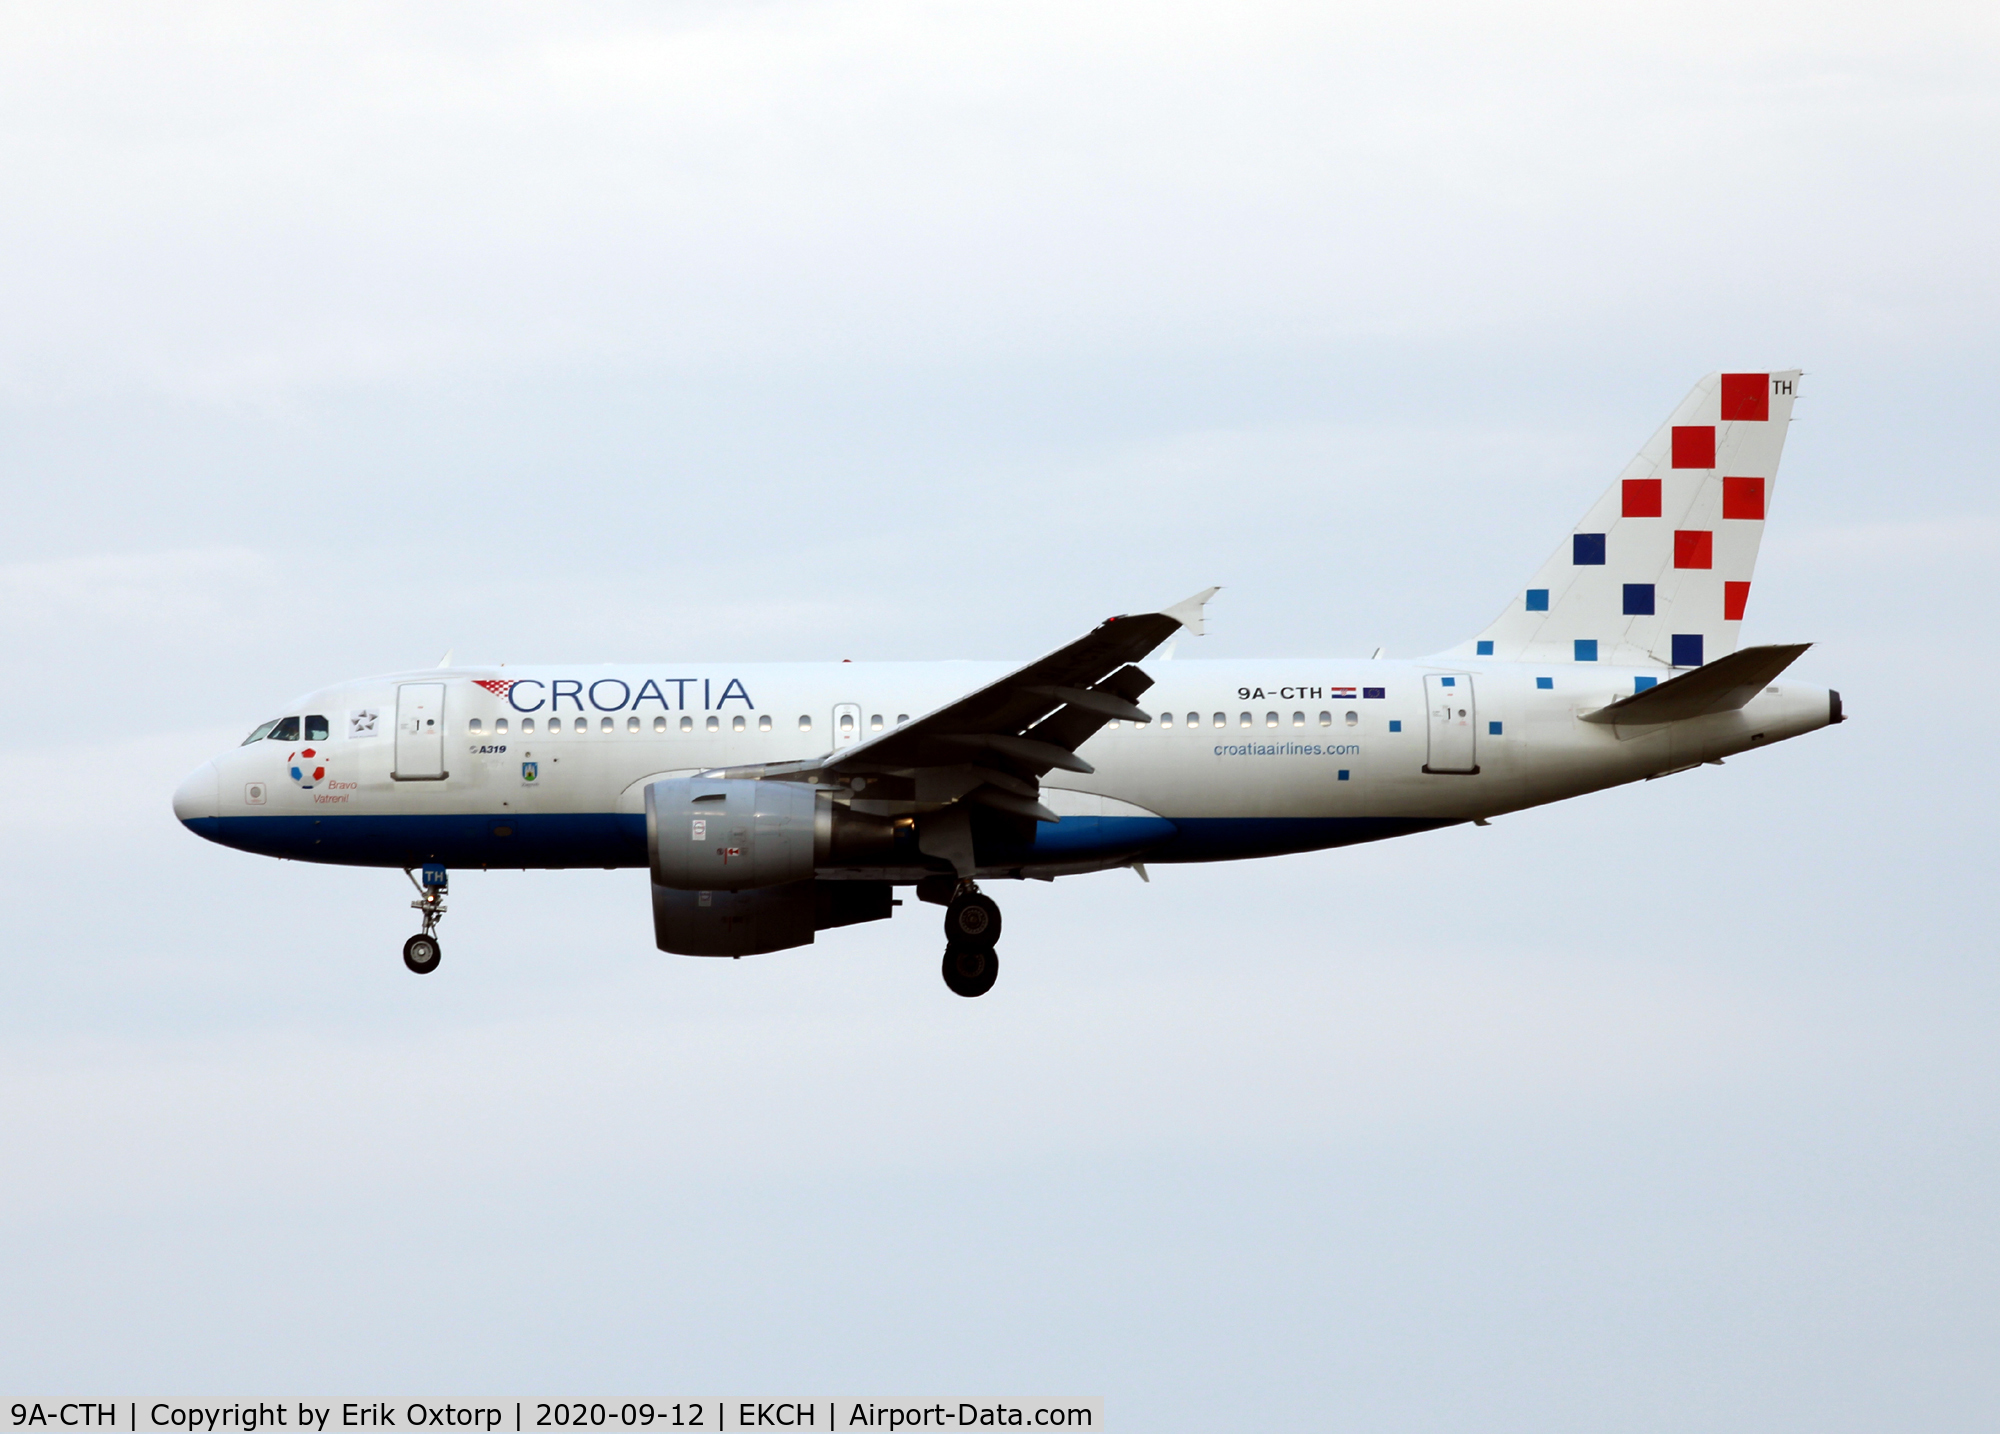 9A-CTH, 1998 Airbus A319-112 C/N 833, 9A-CTH landing rw 22L